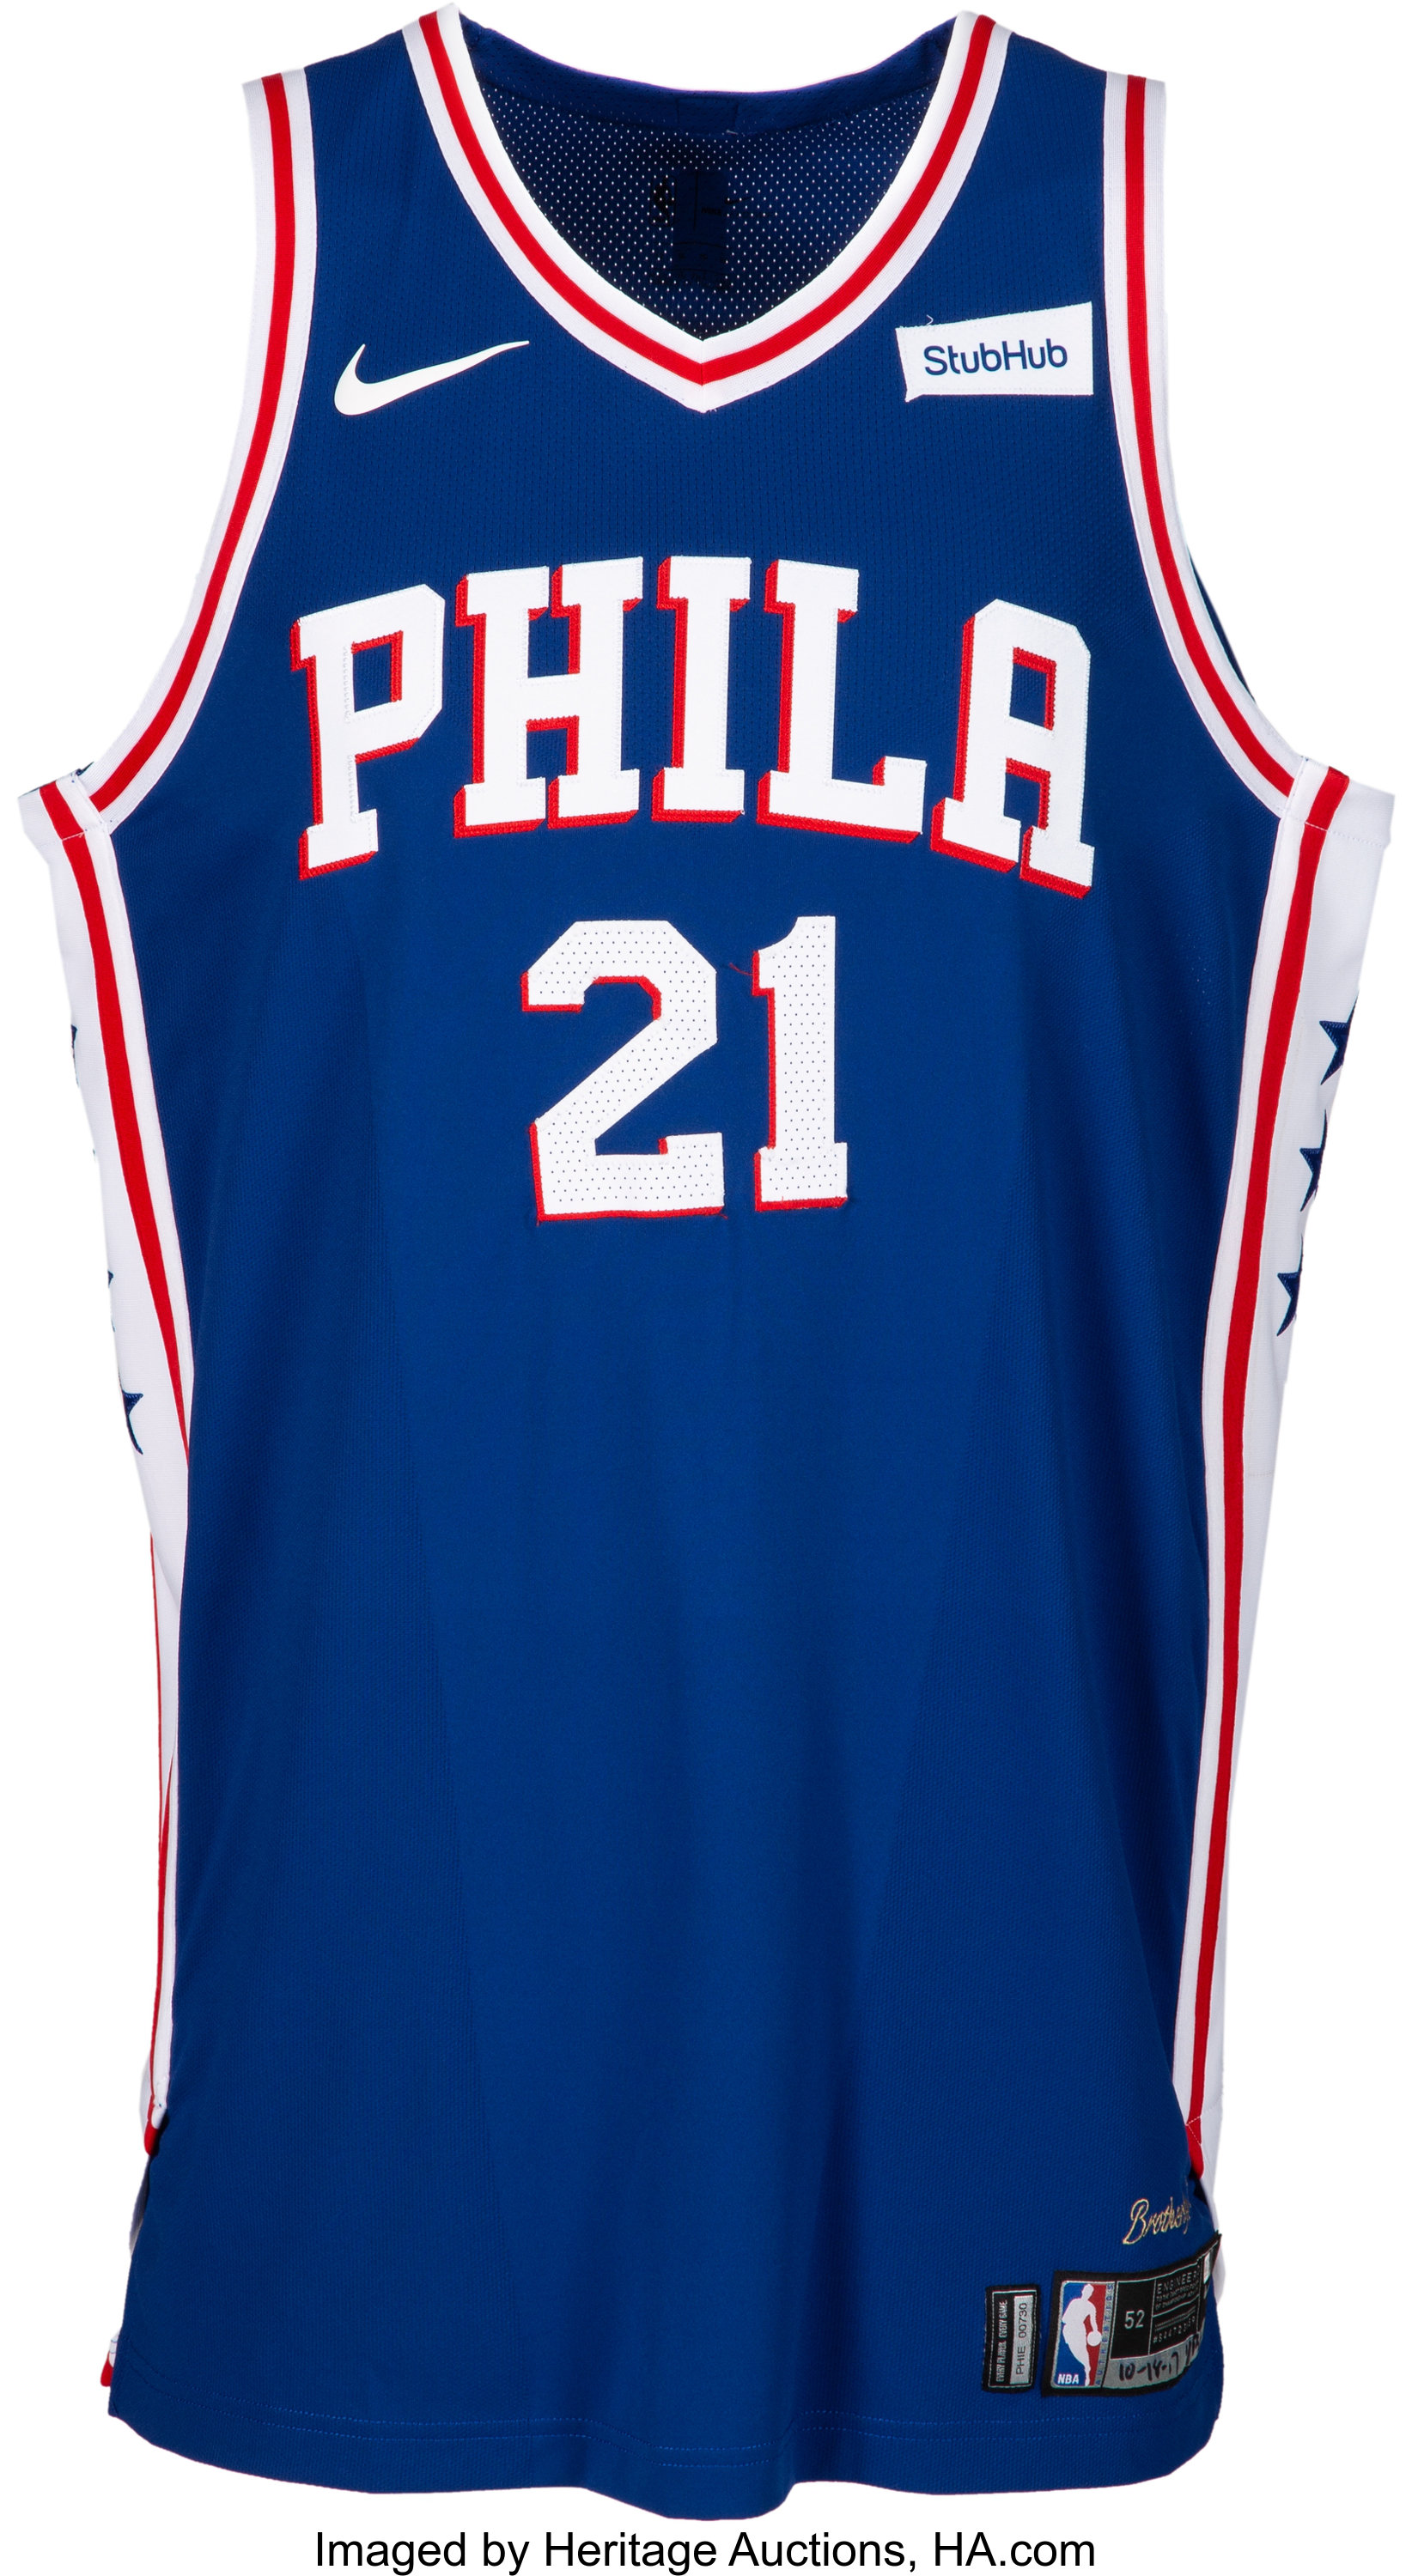 Joel Embiid - Philadelphia 76ers - Game-Worn Icon Edition Jersey